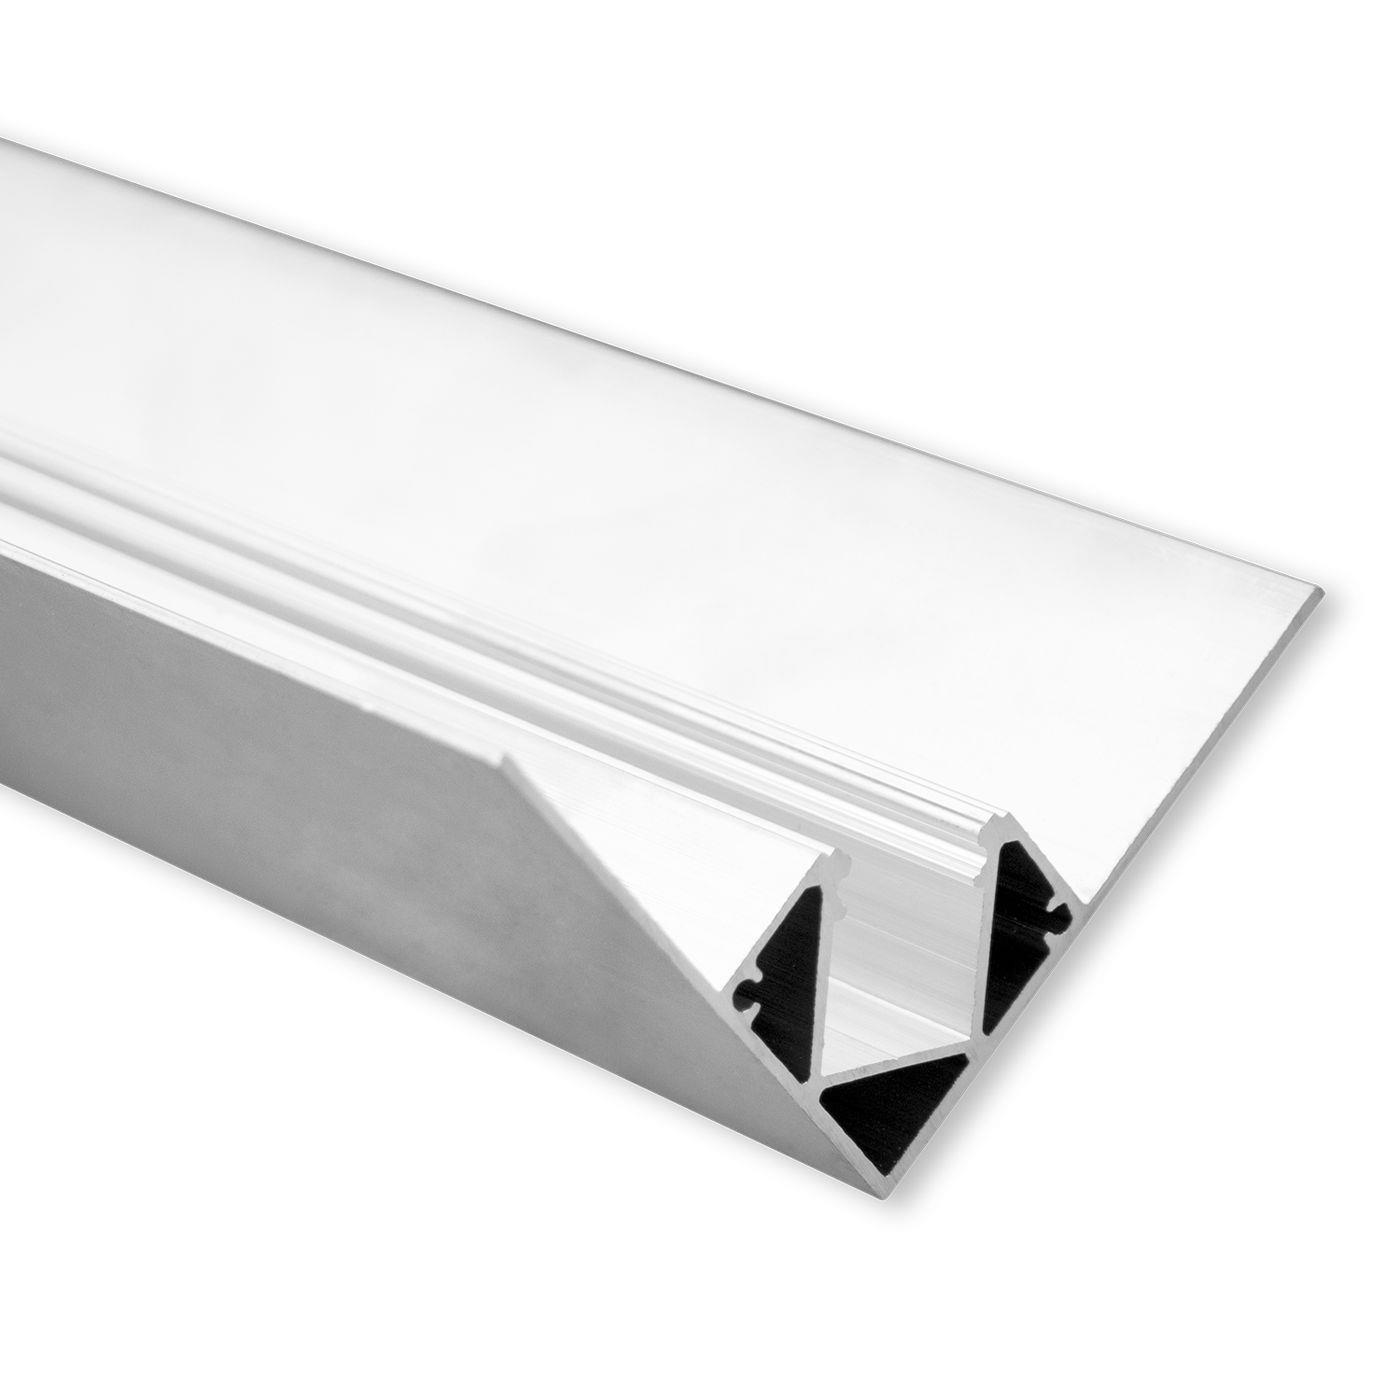 2m LED profile TBP6 Silver 43,7x43,7mm Aluminium Drywall profile for 14mm LED strips